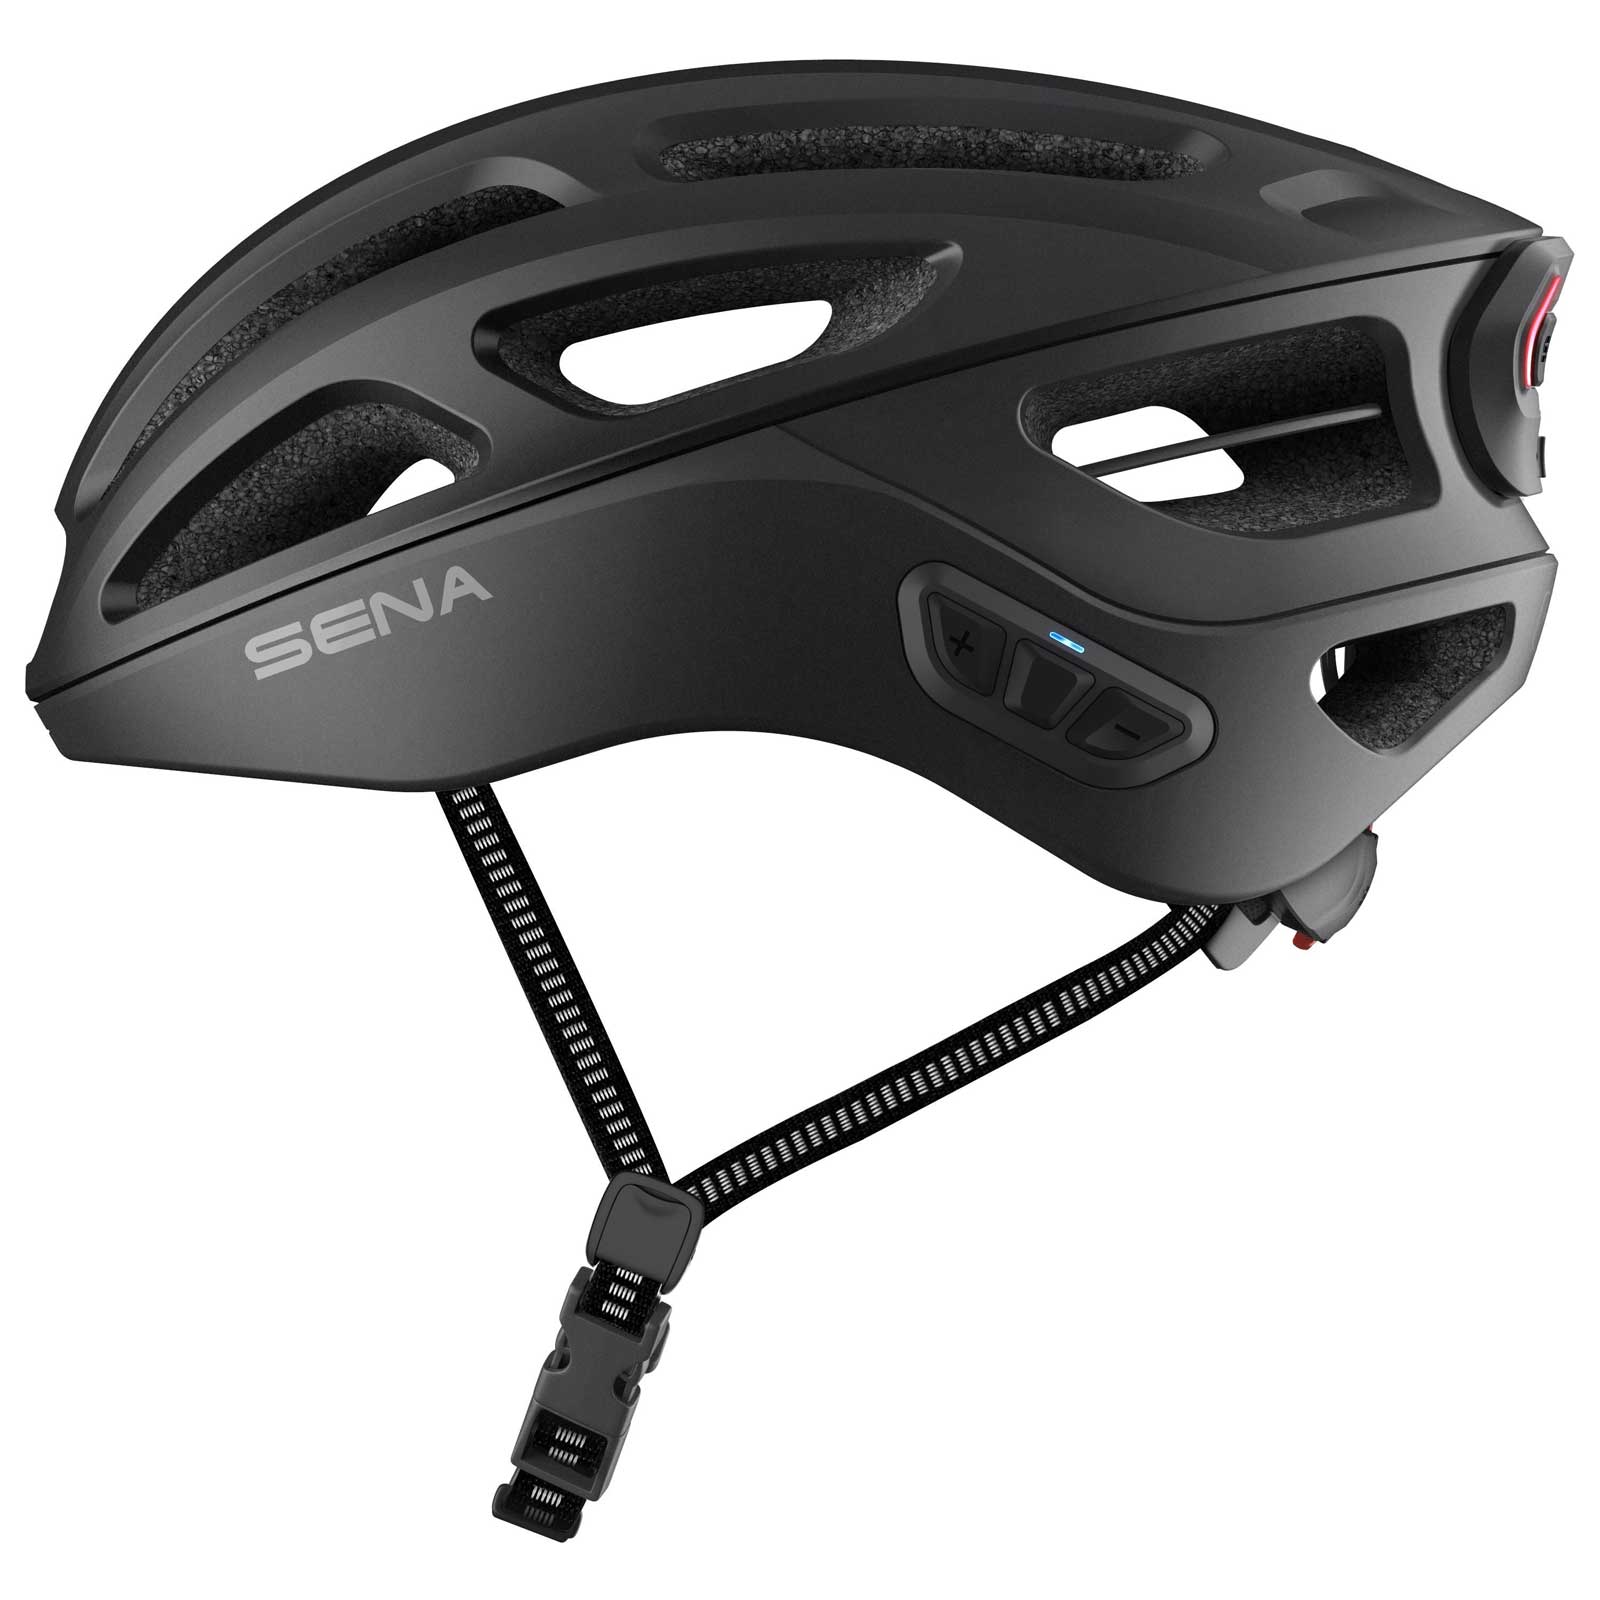 Productfoto van SENA R1 EVO Smart Cycling Helmet - without FM Radio - Matte Black